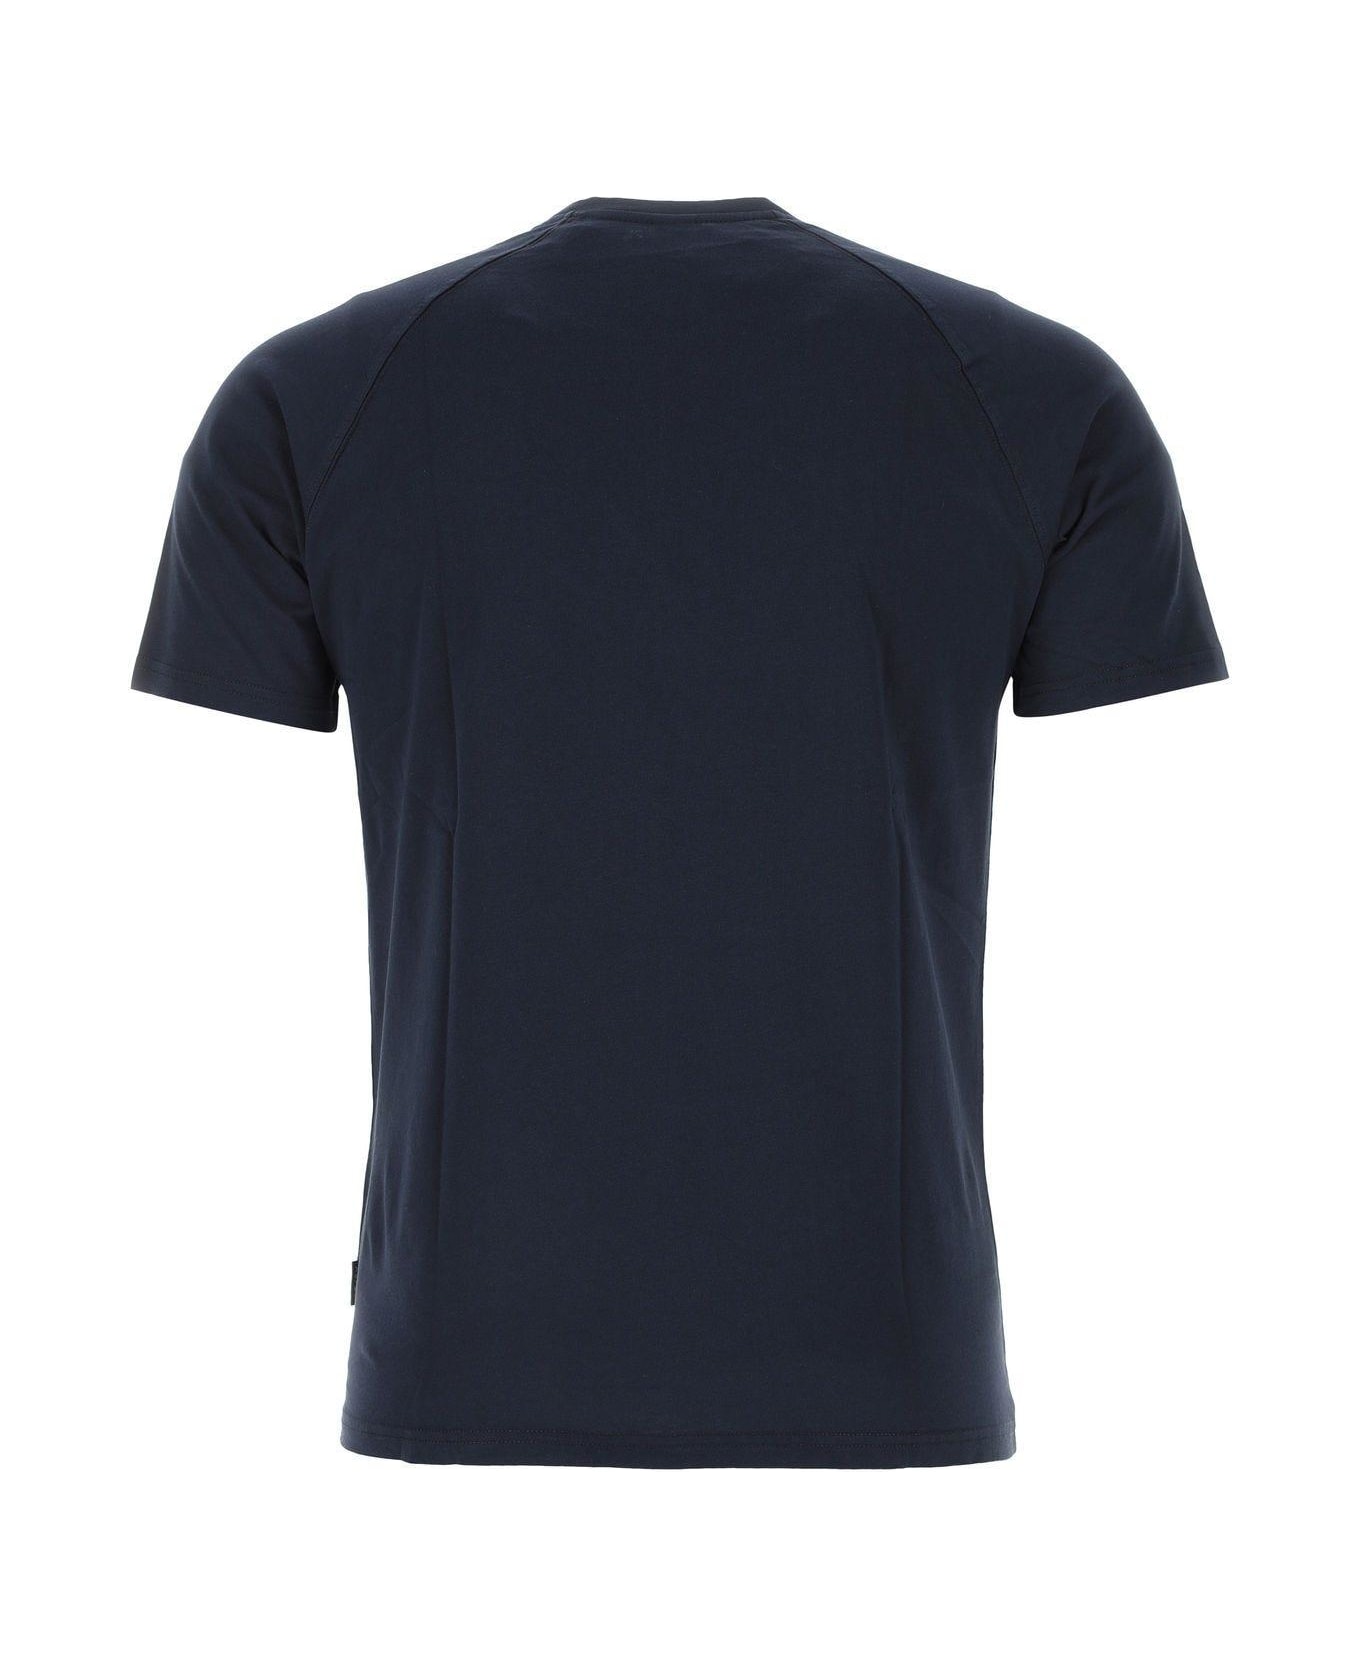 Aspesi Navy Blue Cotton T-shirt - Navy